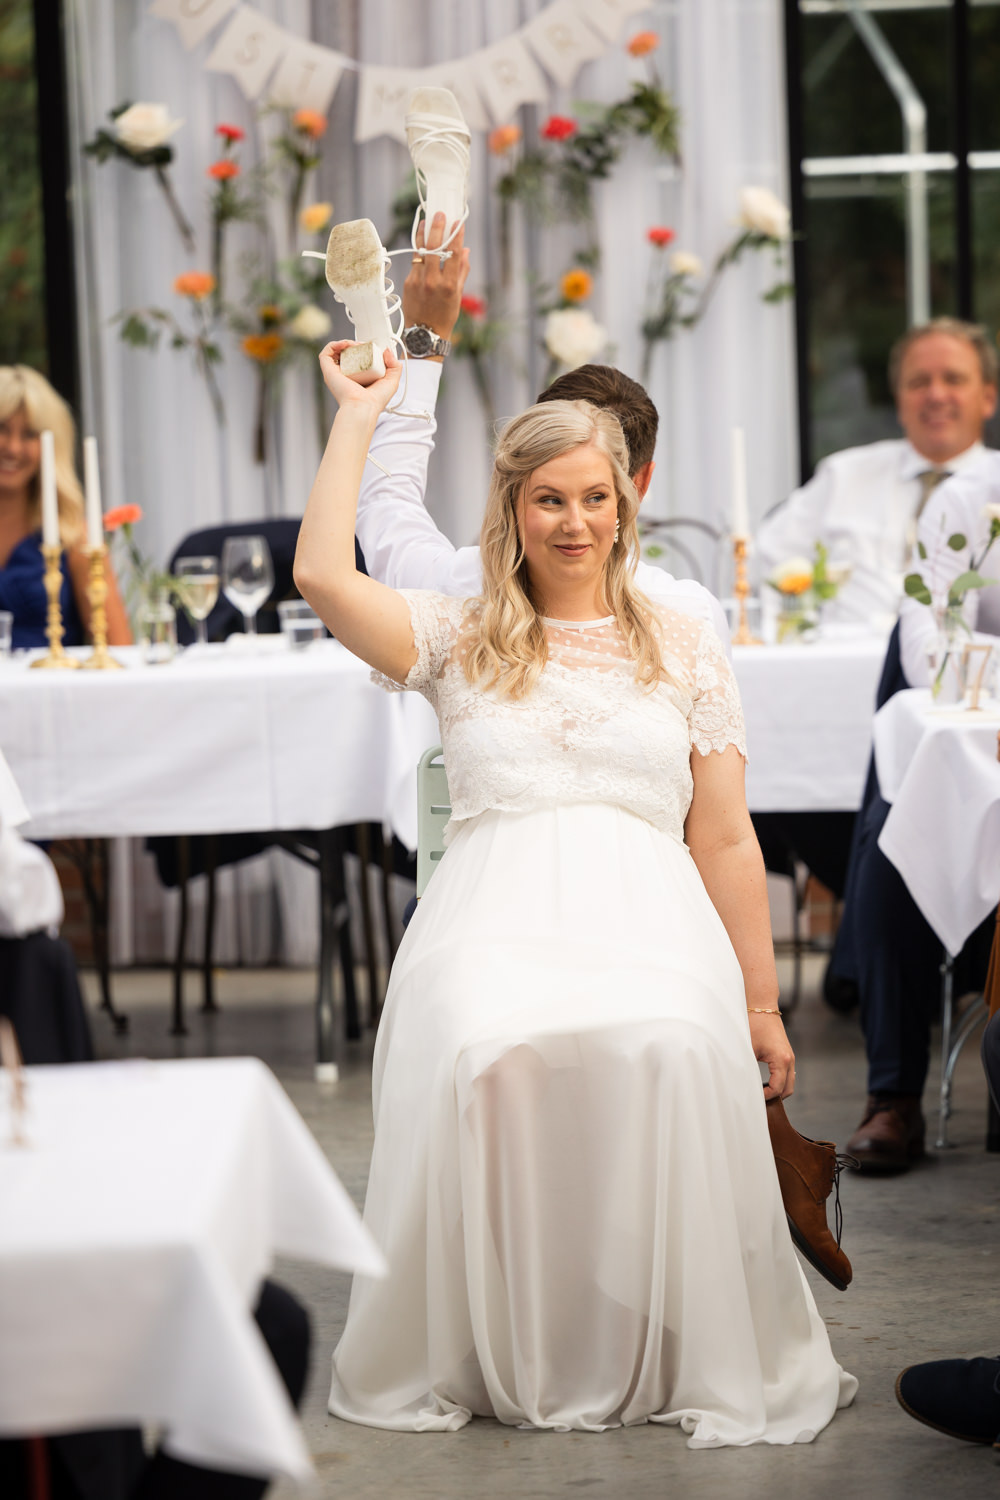 Bröllopsleken "Skoleken" under ett bröllop på Örum 119 i Skåne. Foto: Tove  Lundquist, bröllopsfotograf i Malmö. 